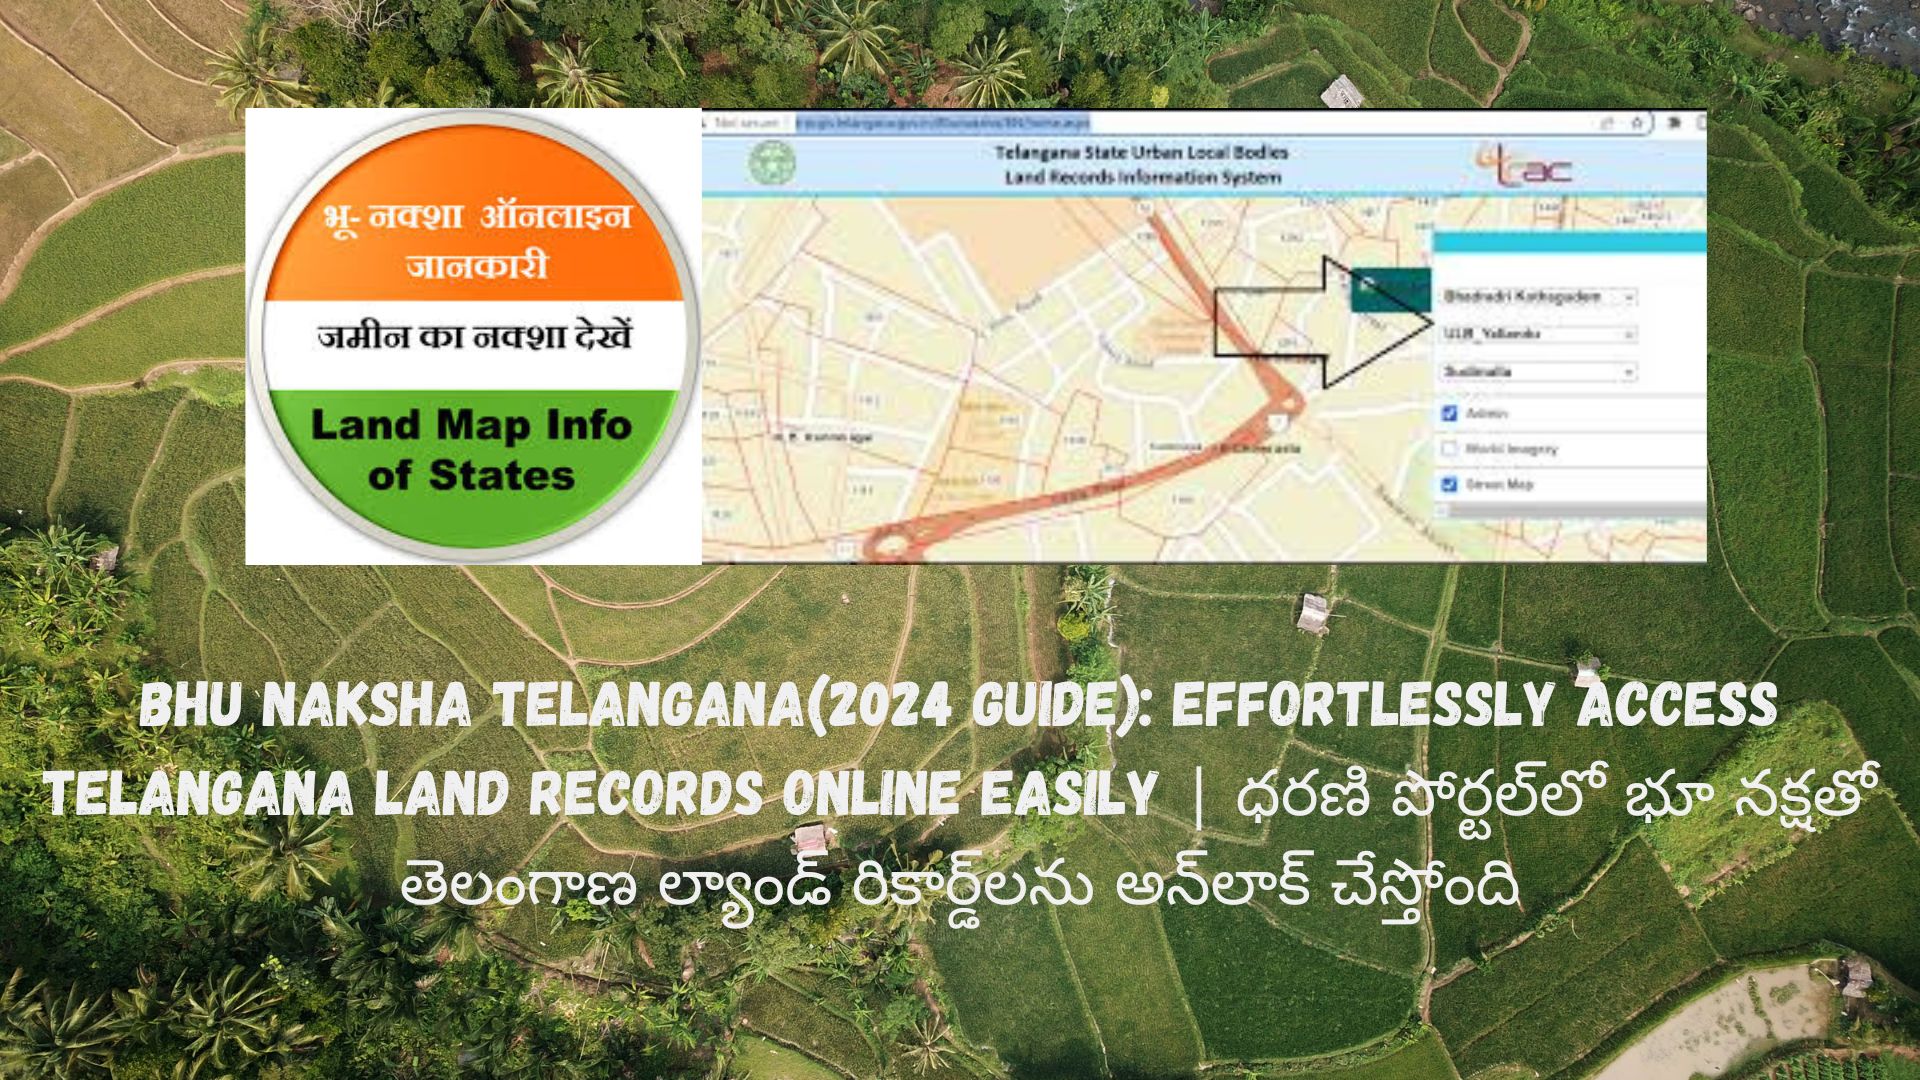 Bhu Naksha Telangana(2024 Guide): Effortlessly Access Telangana Land Records Online Easily | ధరణి పోర్టల్‌లో భూ నక్షతో తెలంగాణ ల్యాండ్ రికార్డ్‌లను అన్‌లాక్ చేస్తోంది